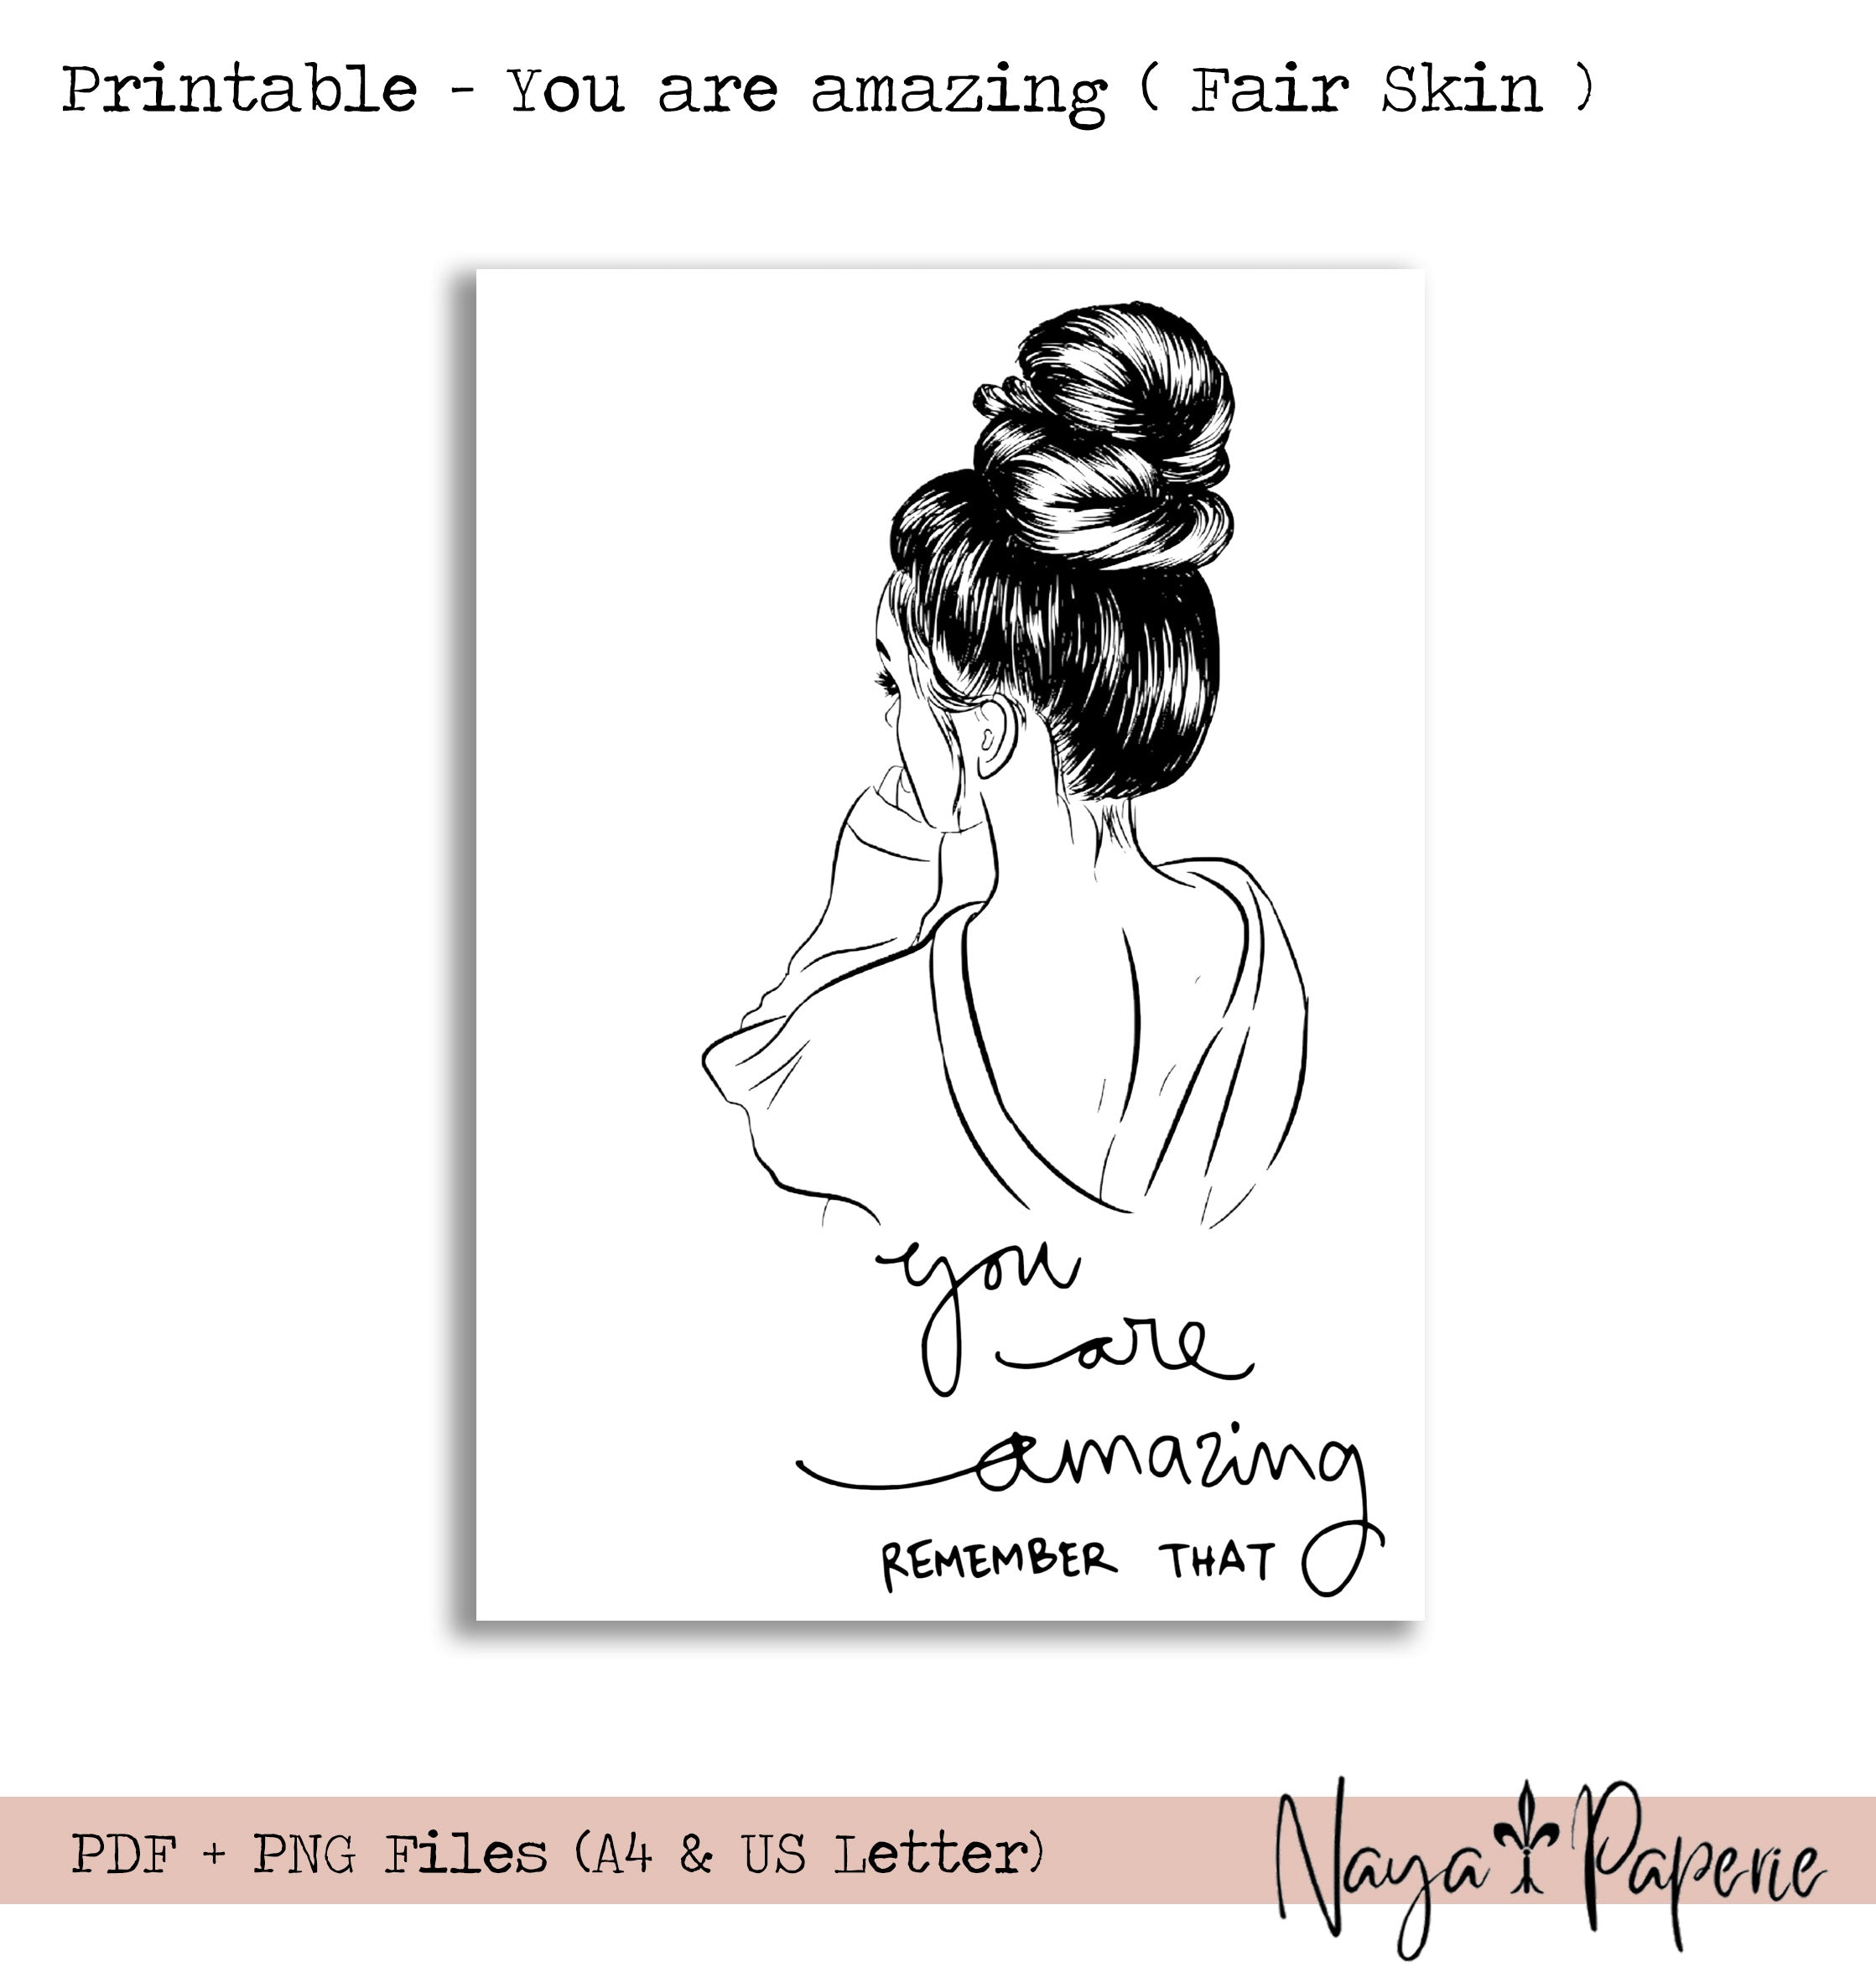 You are amazing (fair skin) - Printable Dashboard